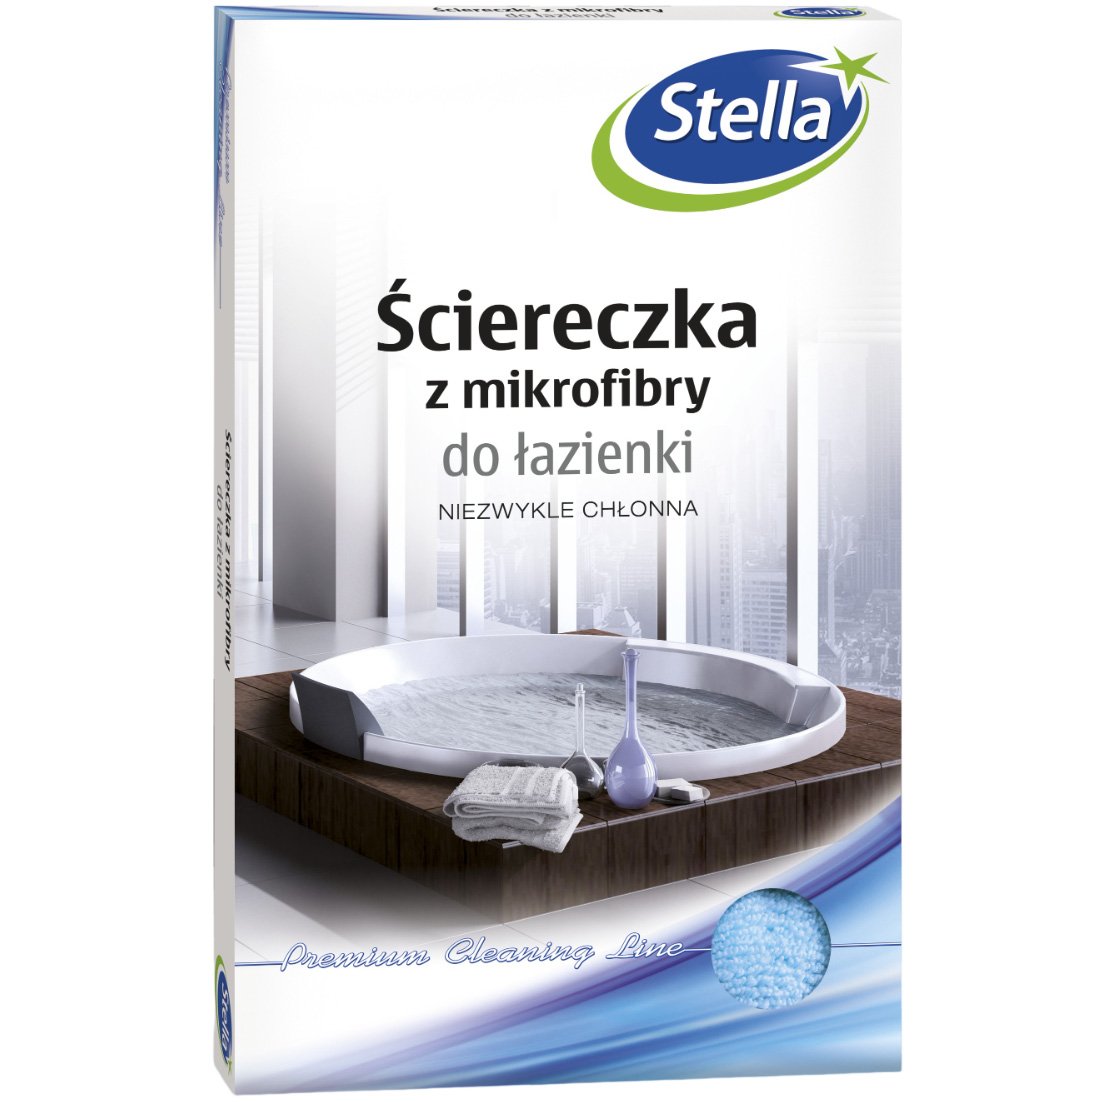 Салфетка Stella микрофибра для ванной комнаты - фото 1